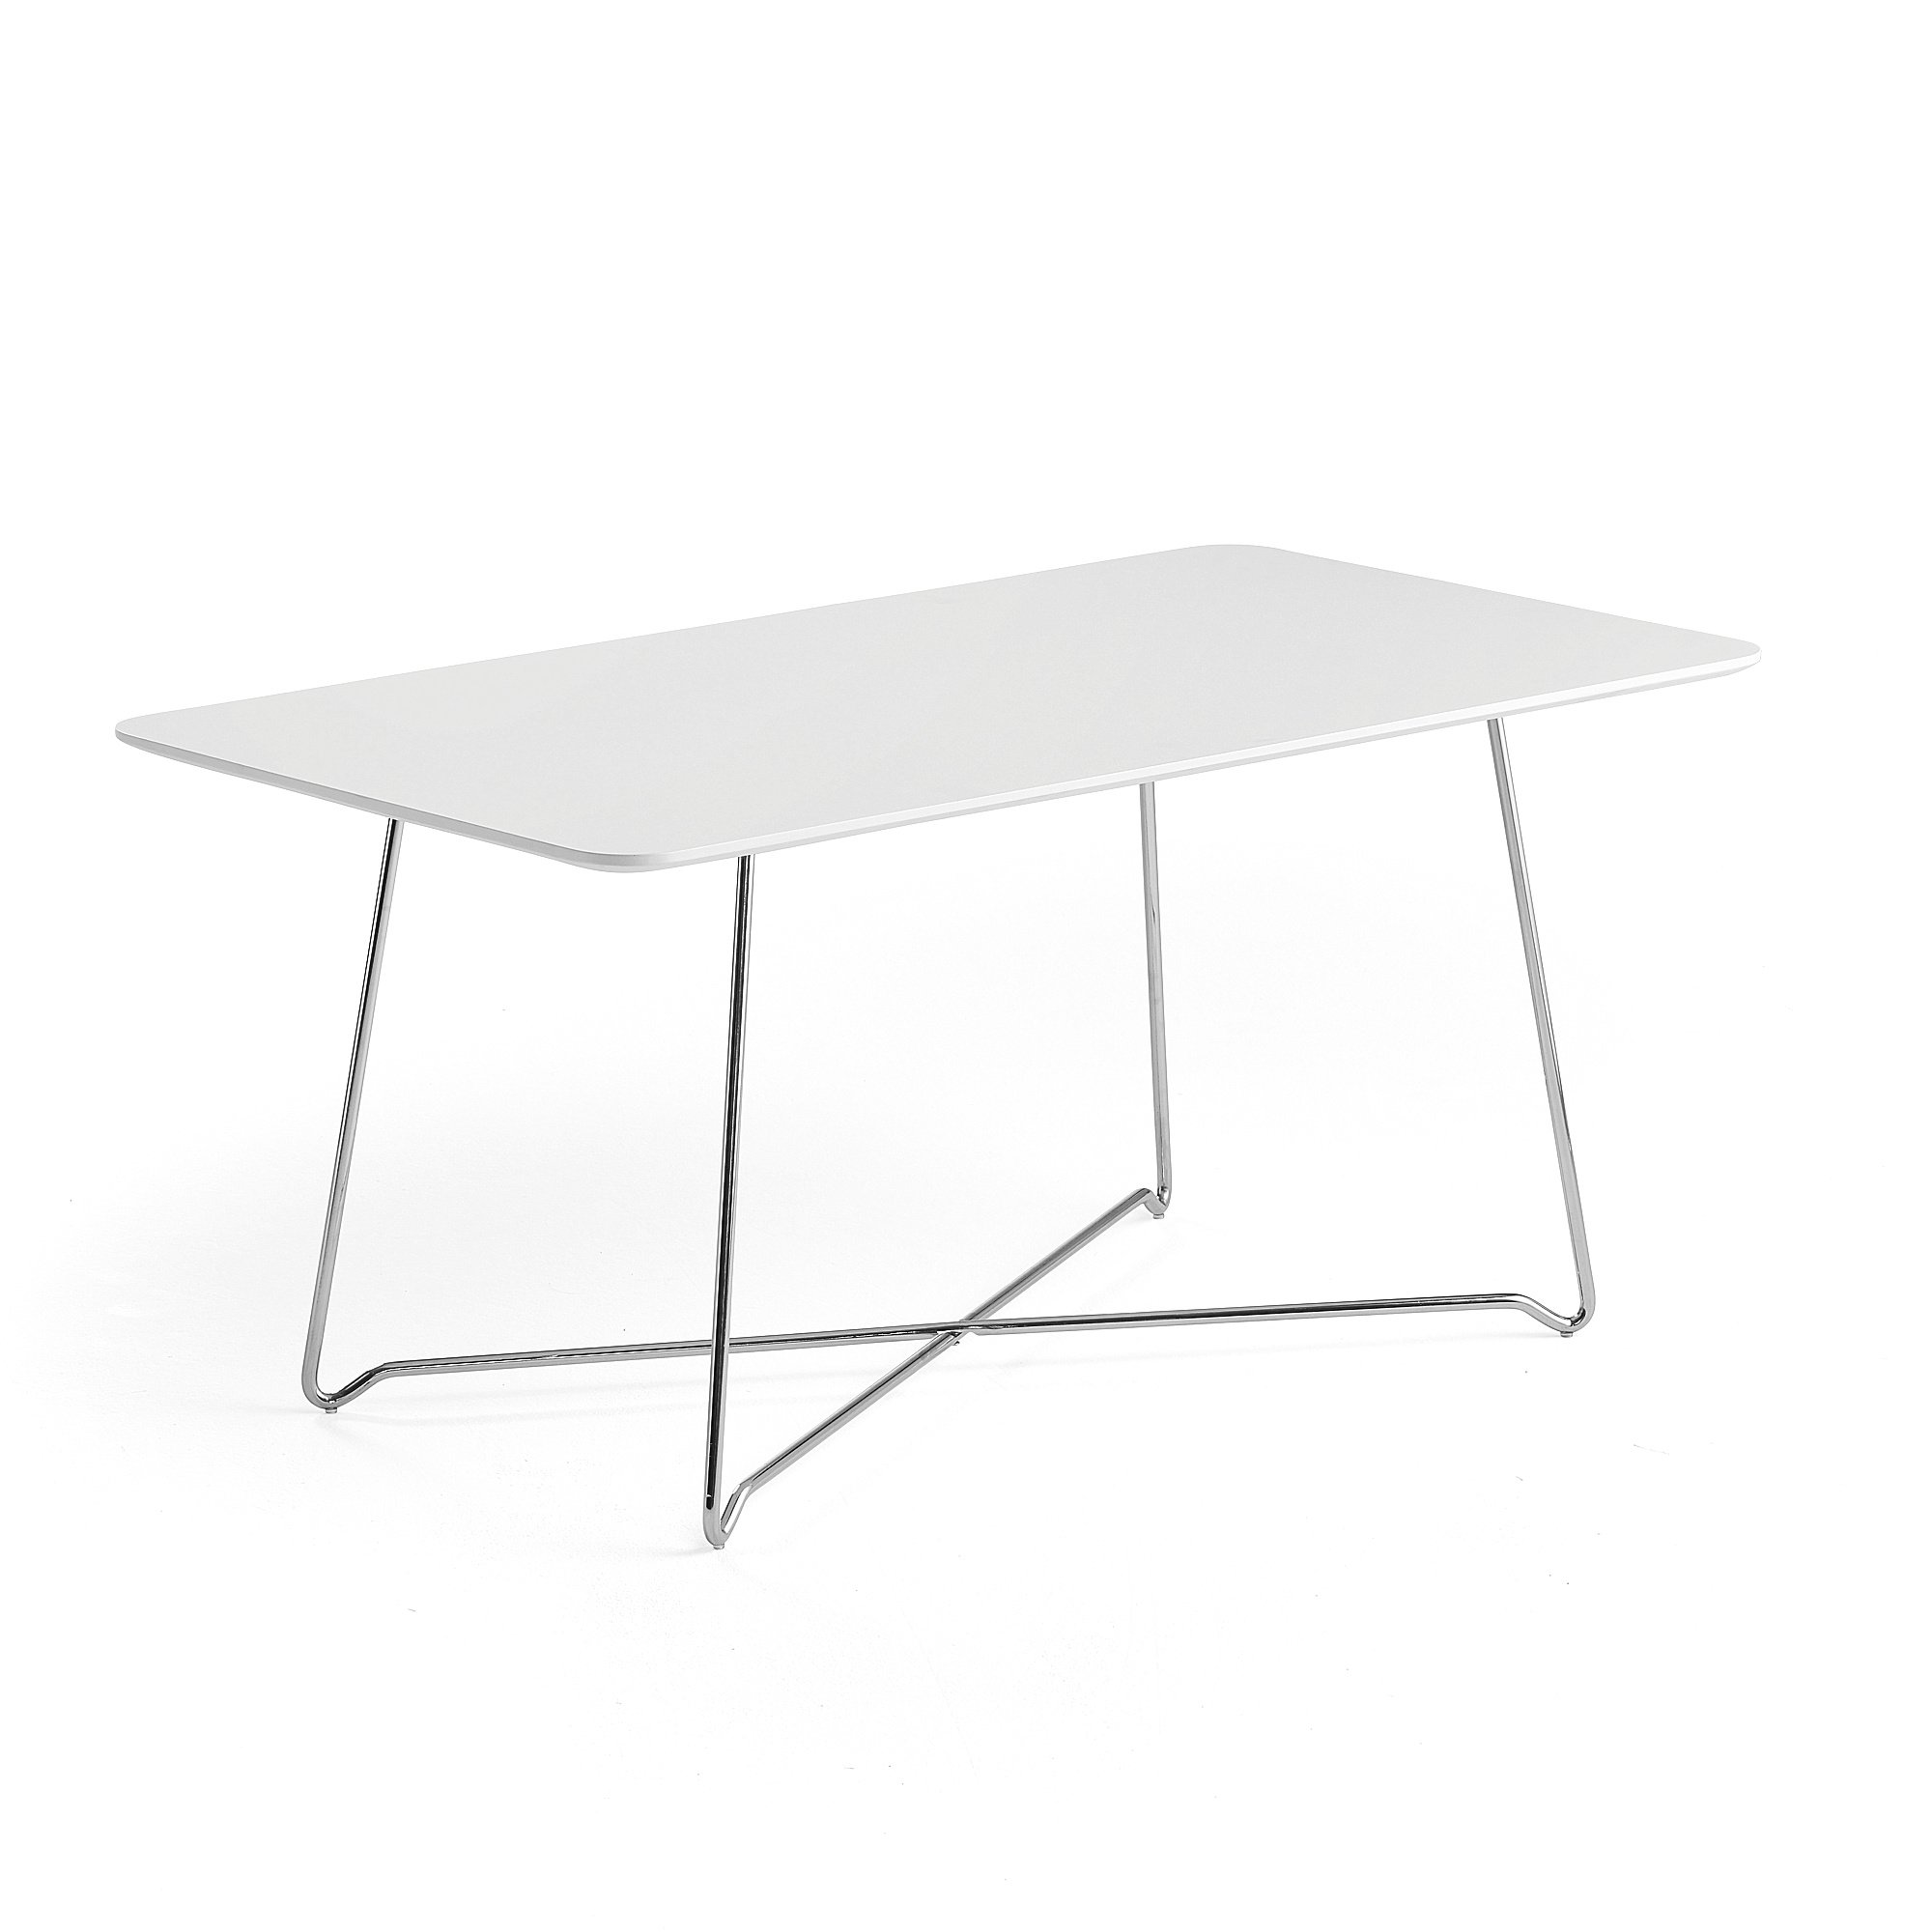 Konferenční stolek IRIS, 1100x600 mm, chrom, bílá deska